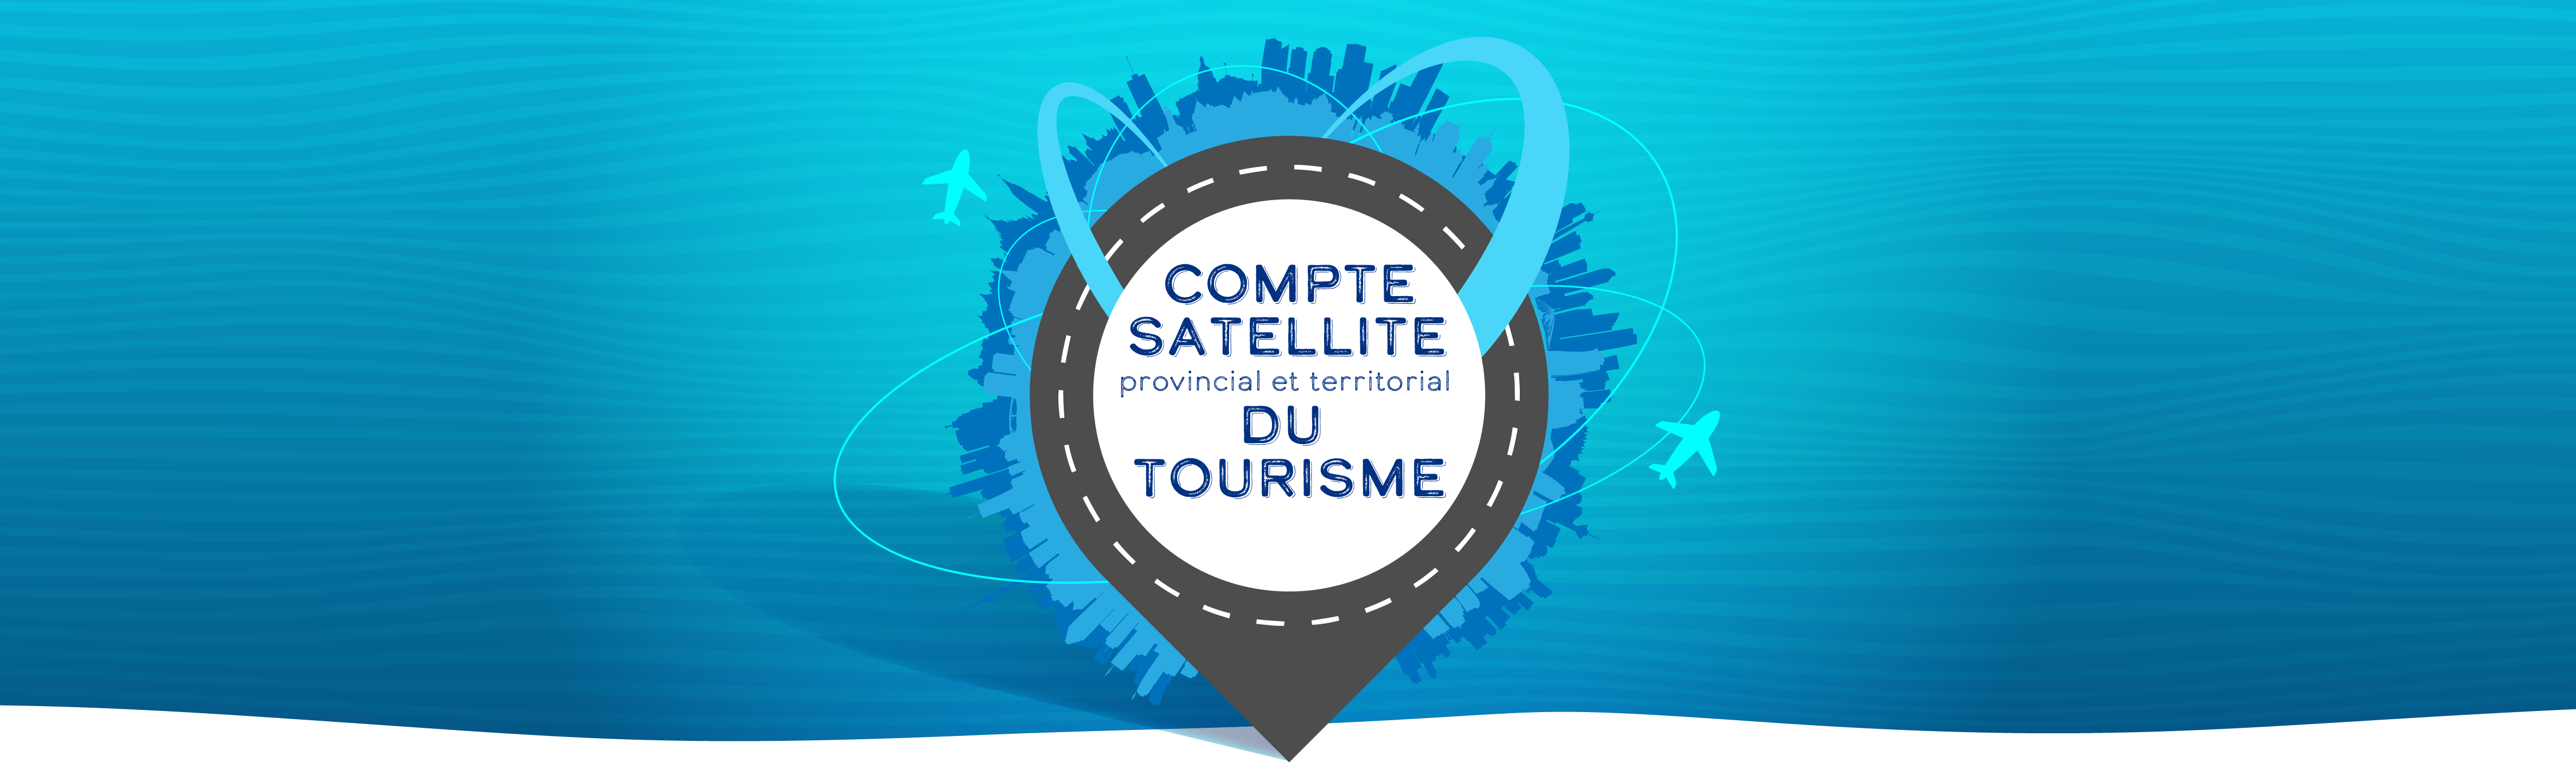 Compte satellite provincial et territorial du tourisme